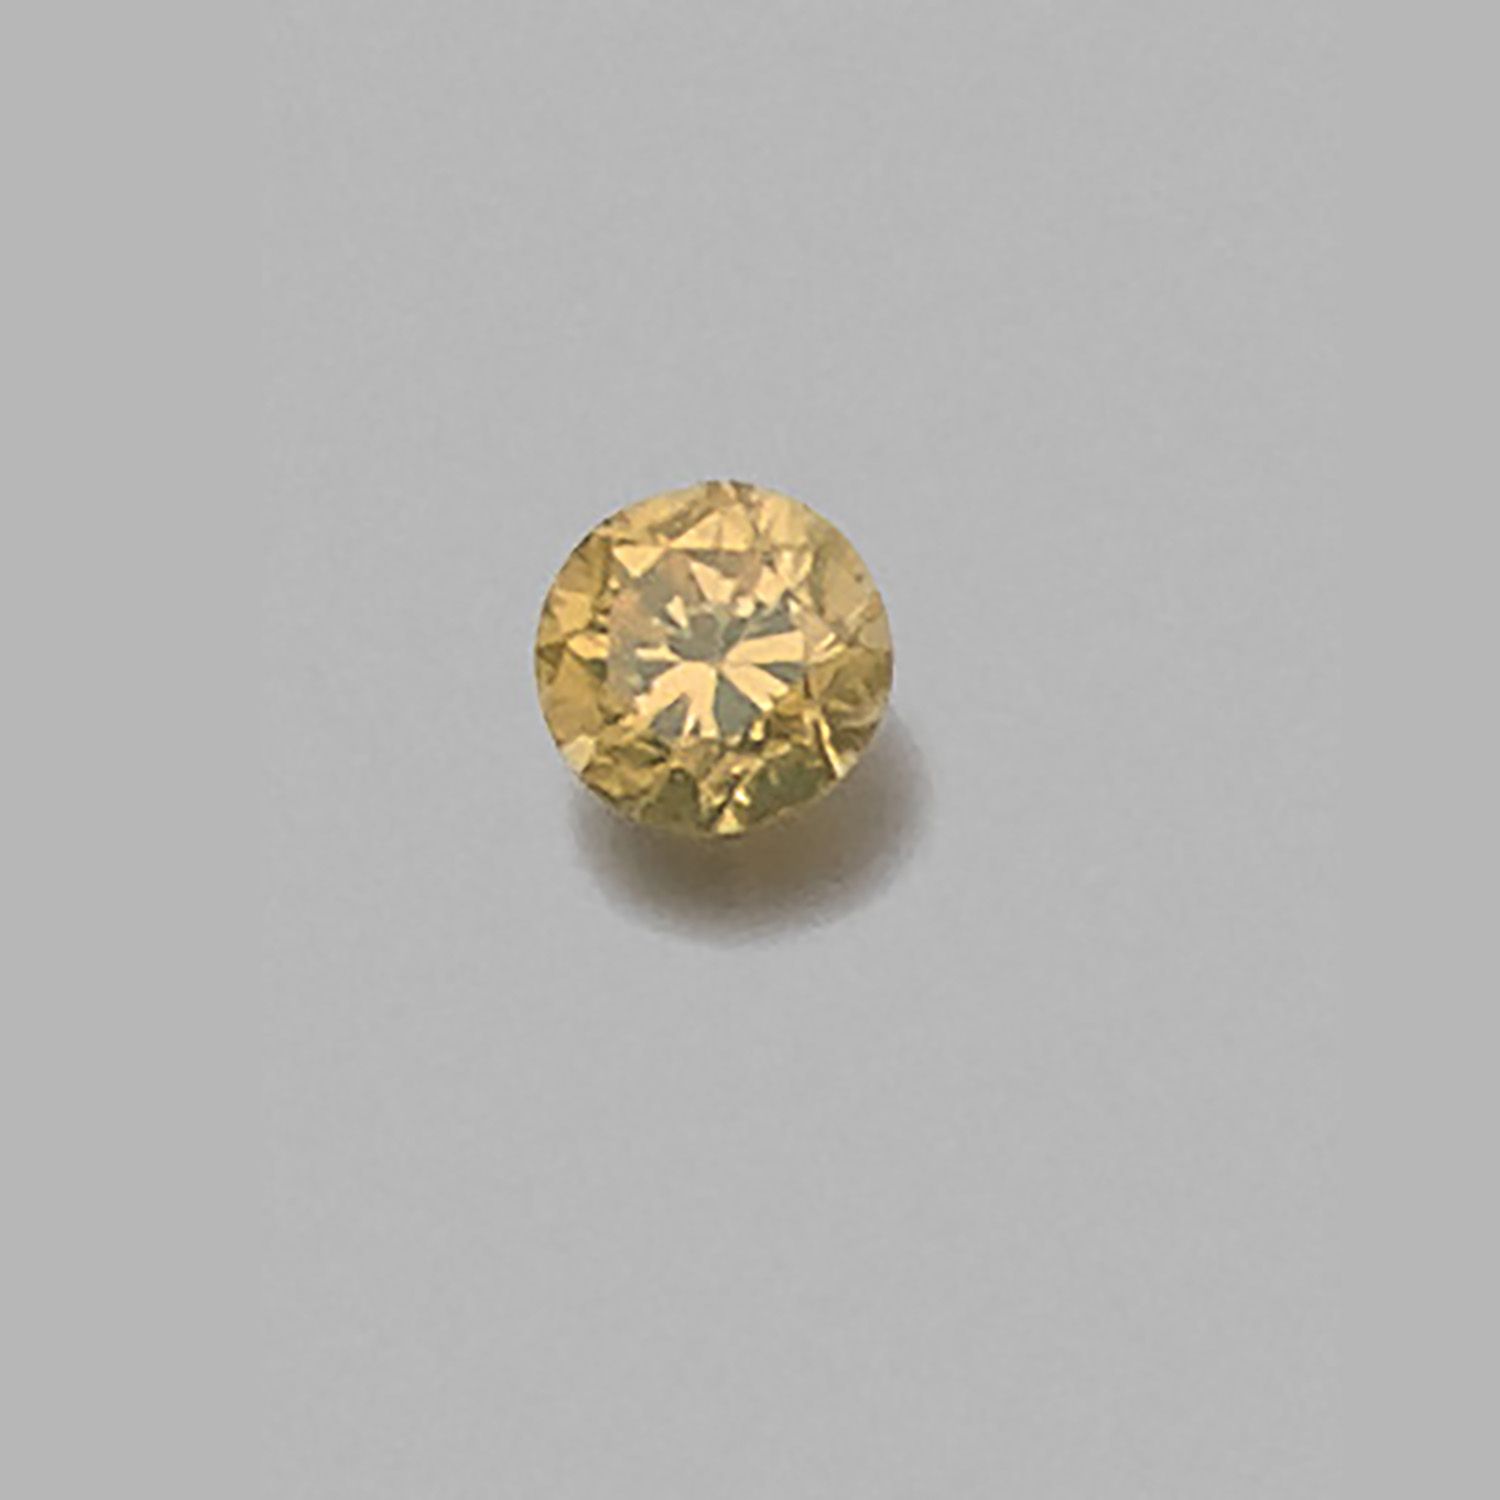 Null DIAMANT 1,03 CARAT FANCY VIVID YELLOW-GREE

Diamant taille brillant sur pap&hellip;